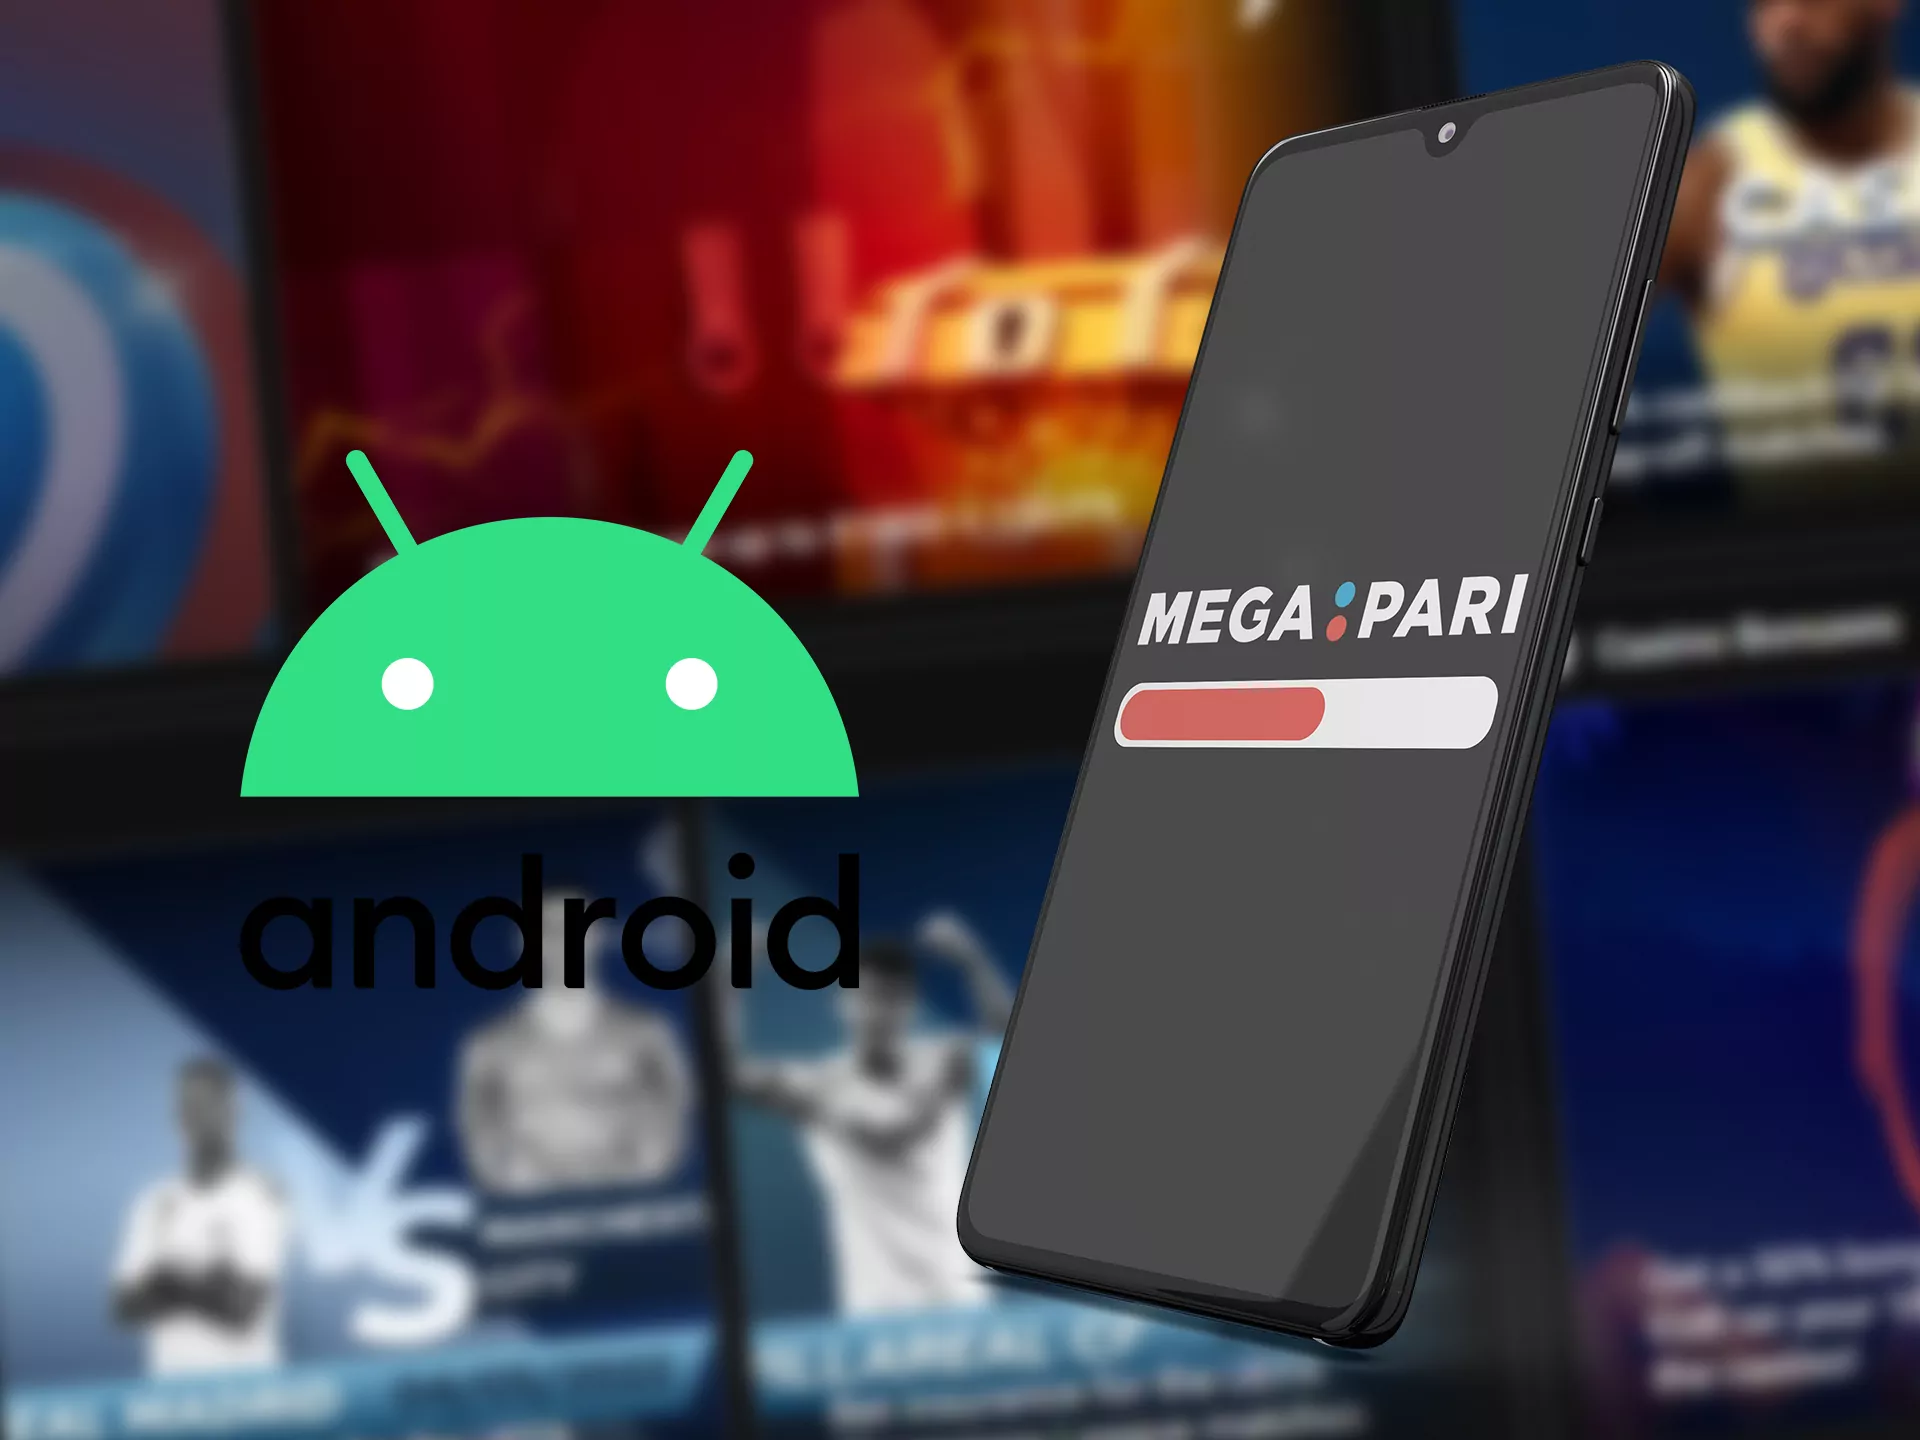 Download the Megapari APK file on your smartphone.